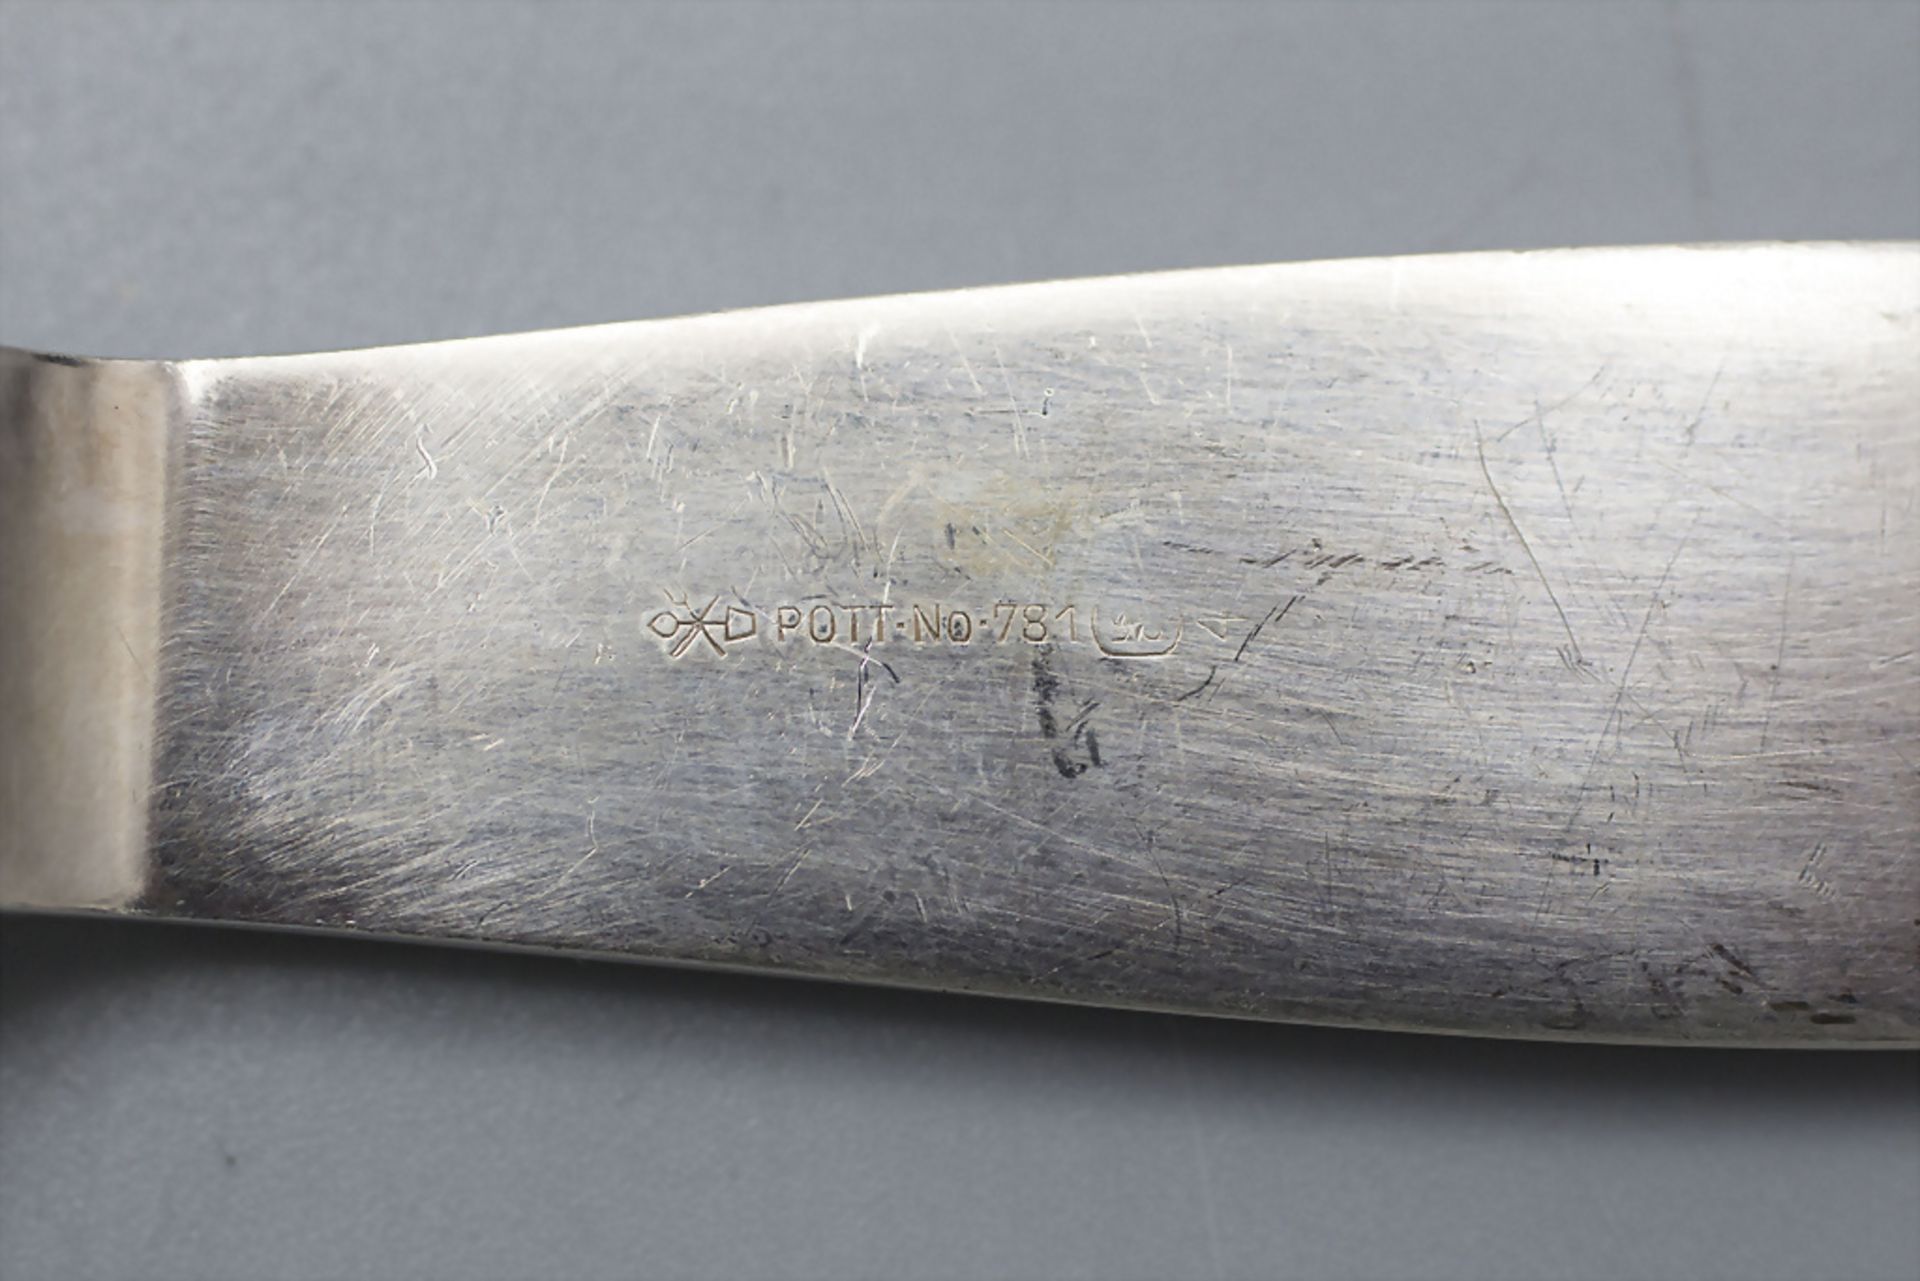 108-tlg. Besteck Set 'No. 781' / A 108-piece set of plated cutlery 'No. 781', Carl Pott ... - Bild 4 aus 4